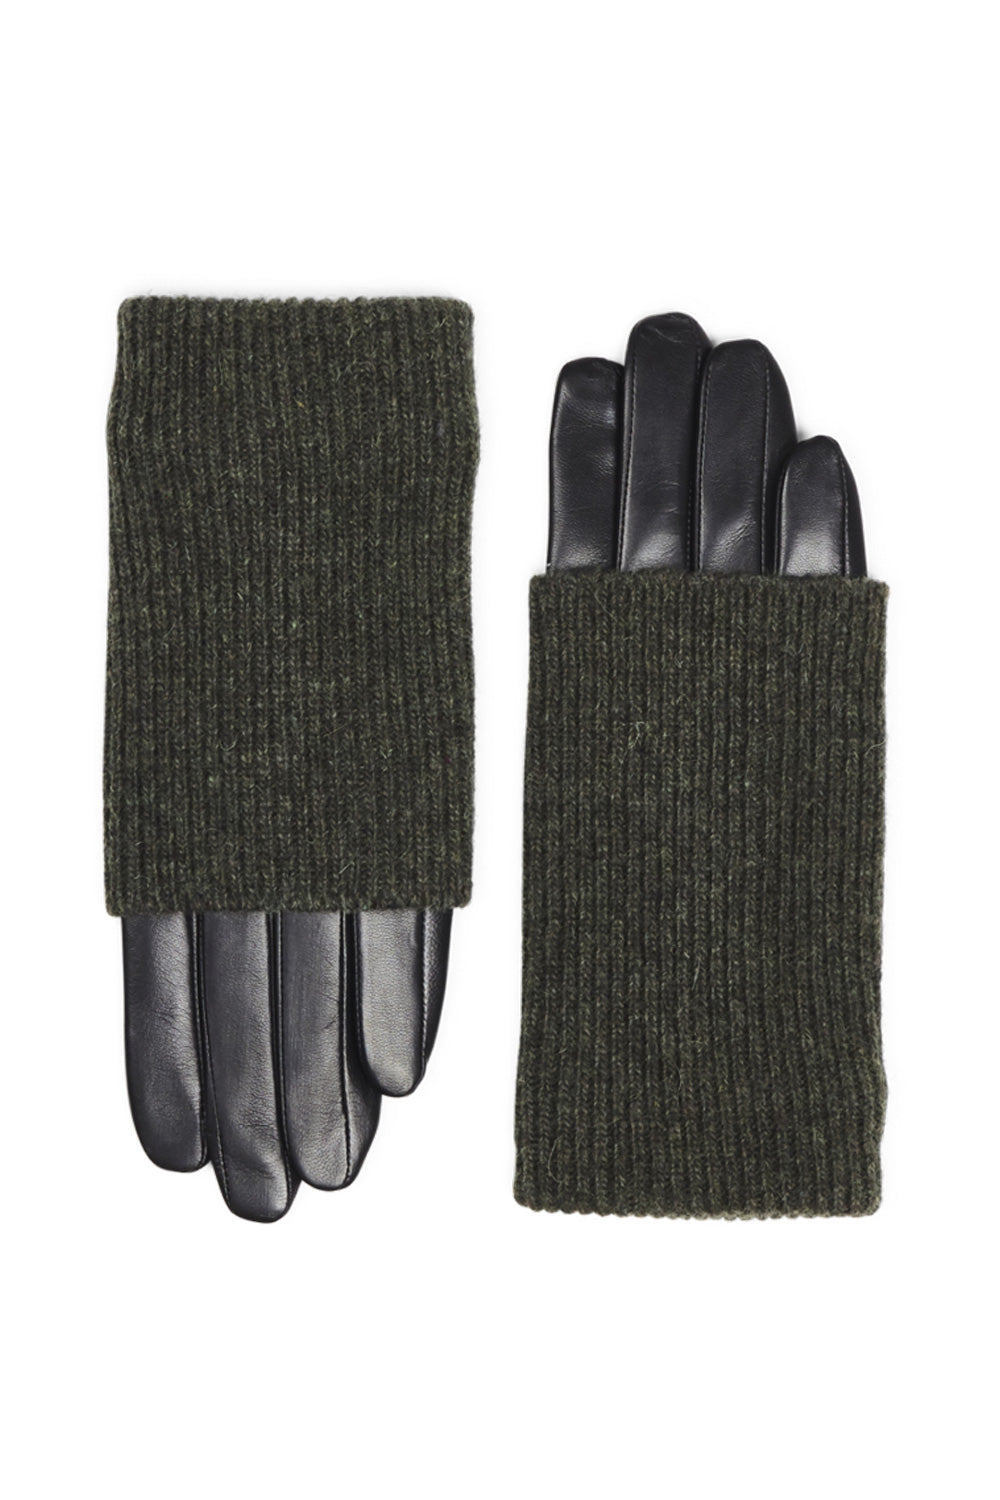 Markberg HellyMBG Glove 108 Black w/Green